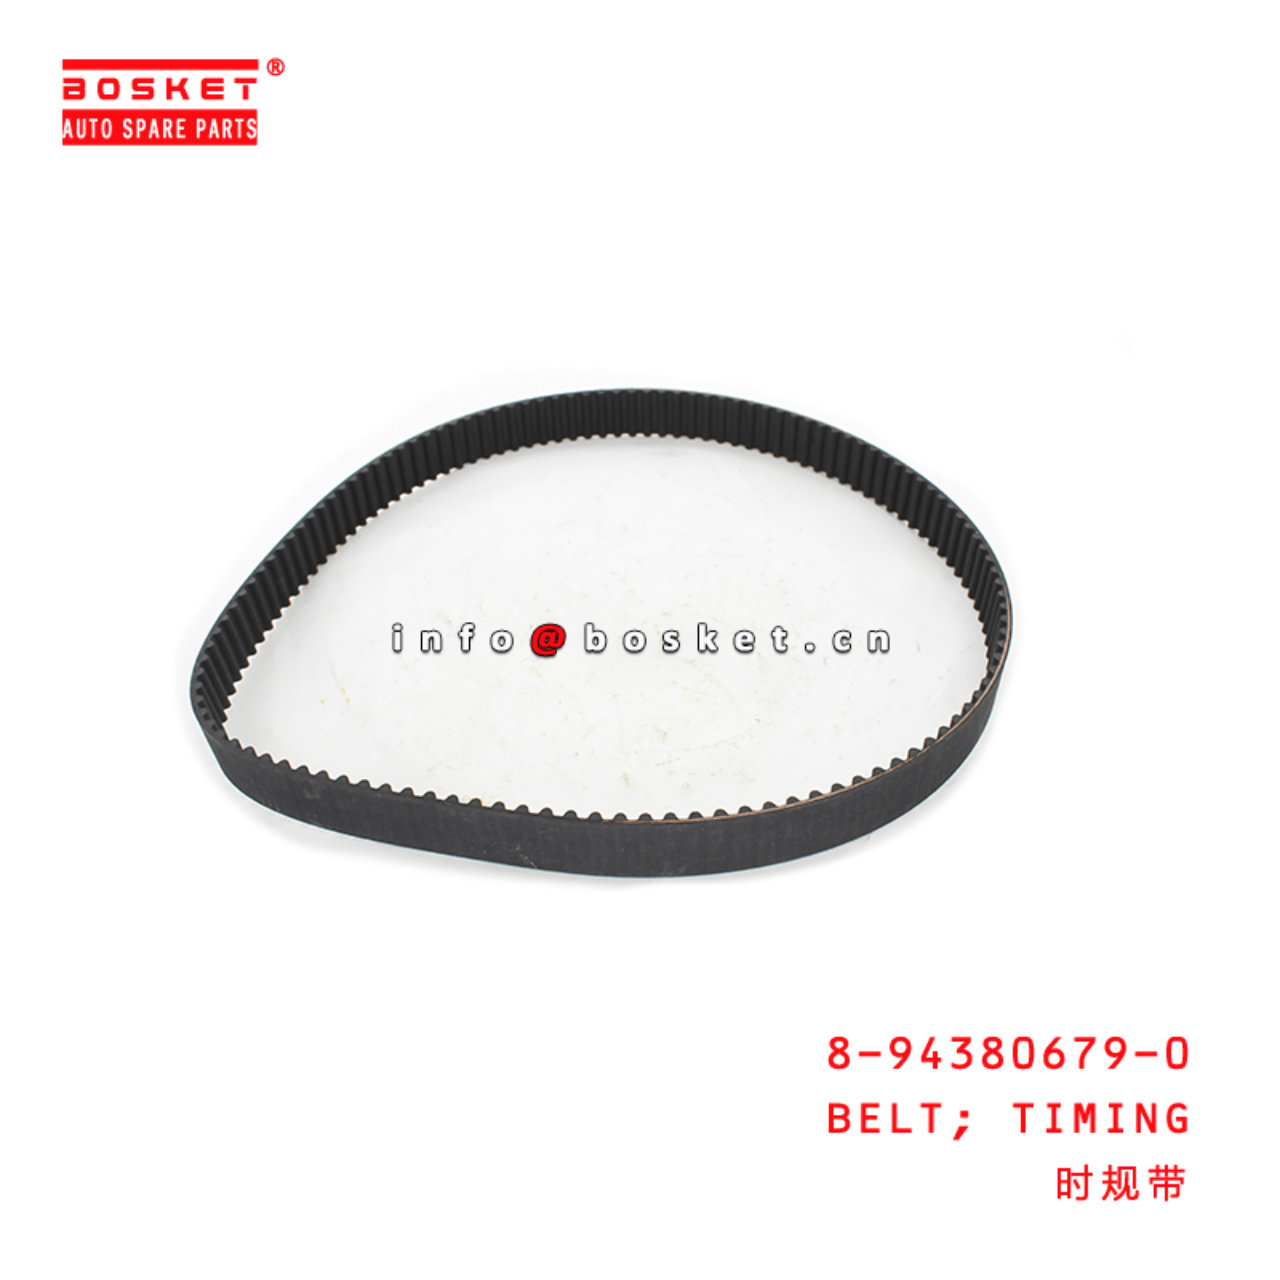 8-94380679-0 Timing Belt Suitable for ISUZU NKR55 4JB1 8943806790 